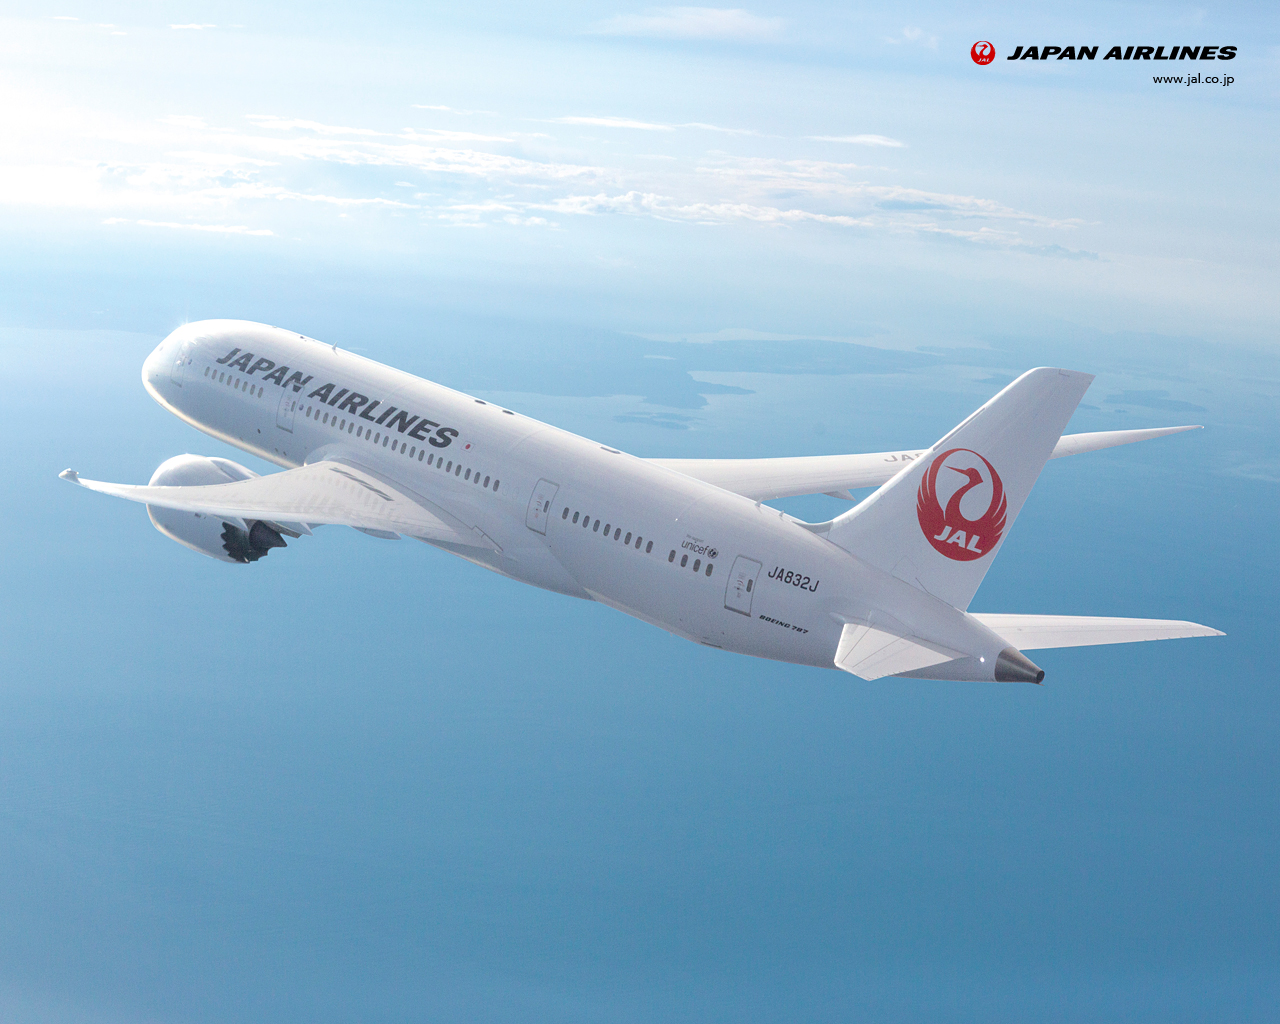 Japan Airlines 1280x1024 Wallpaper Teahub Io